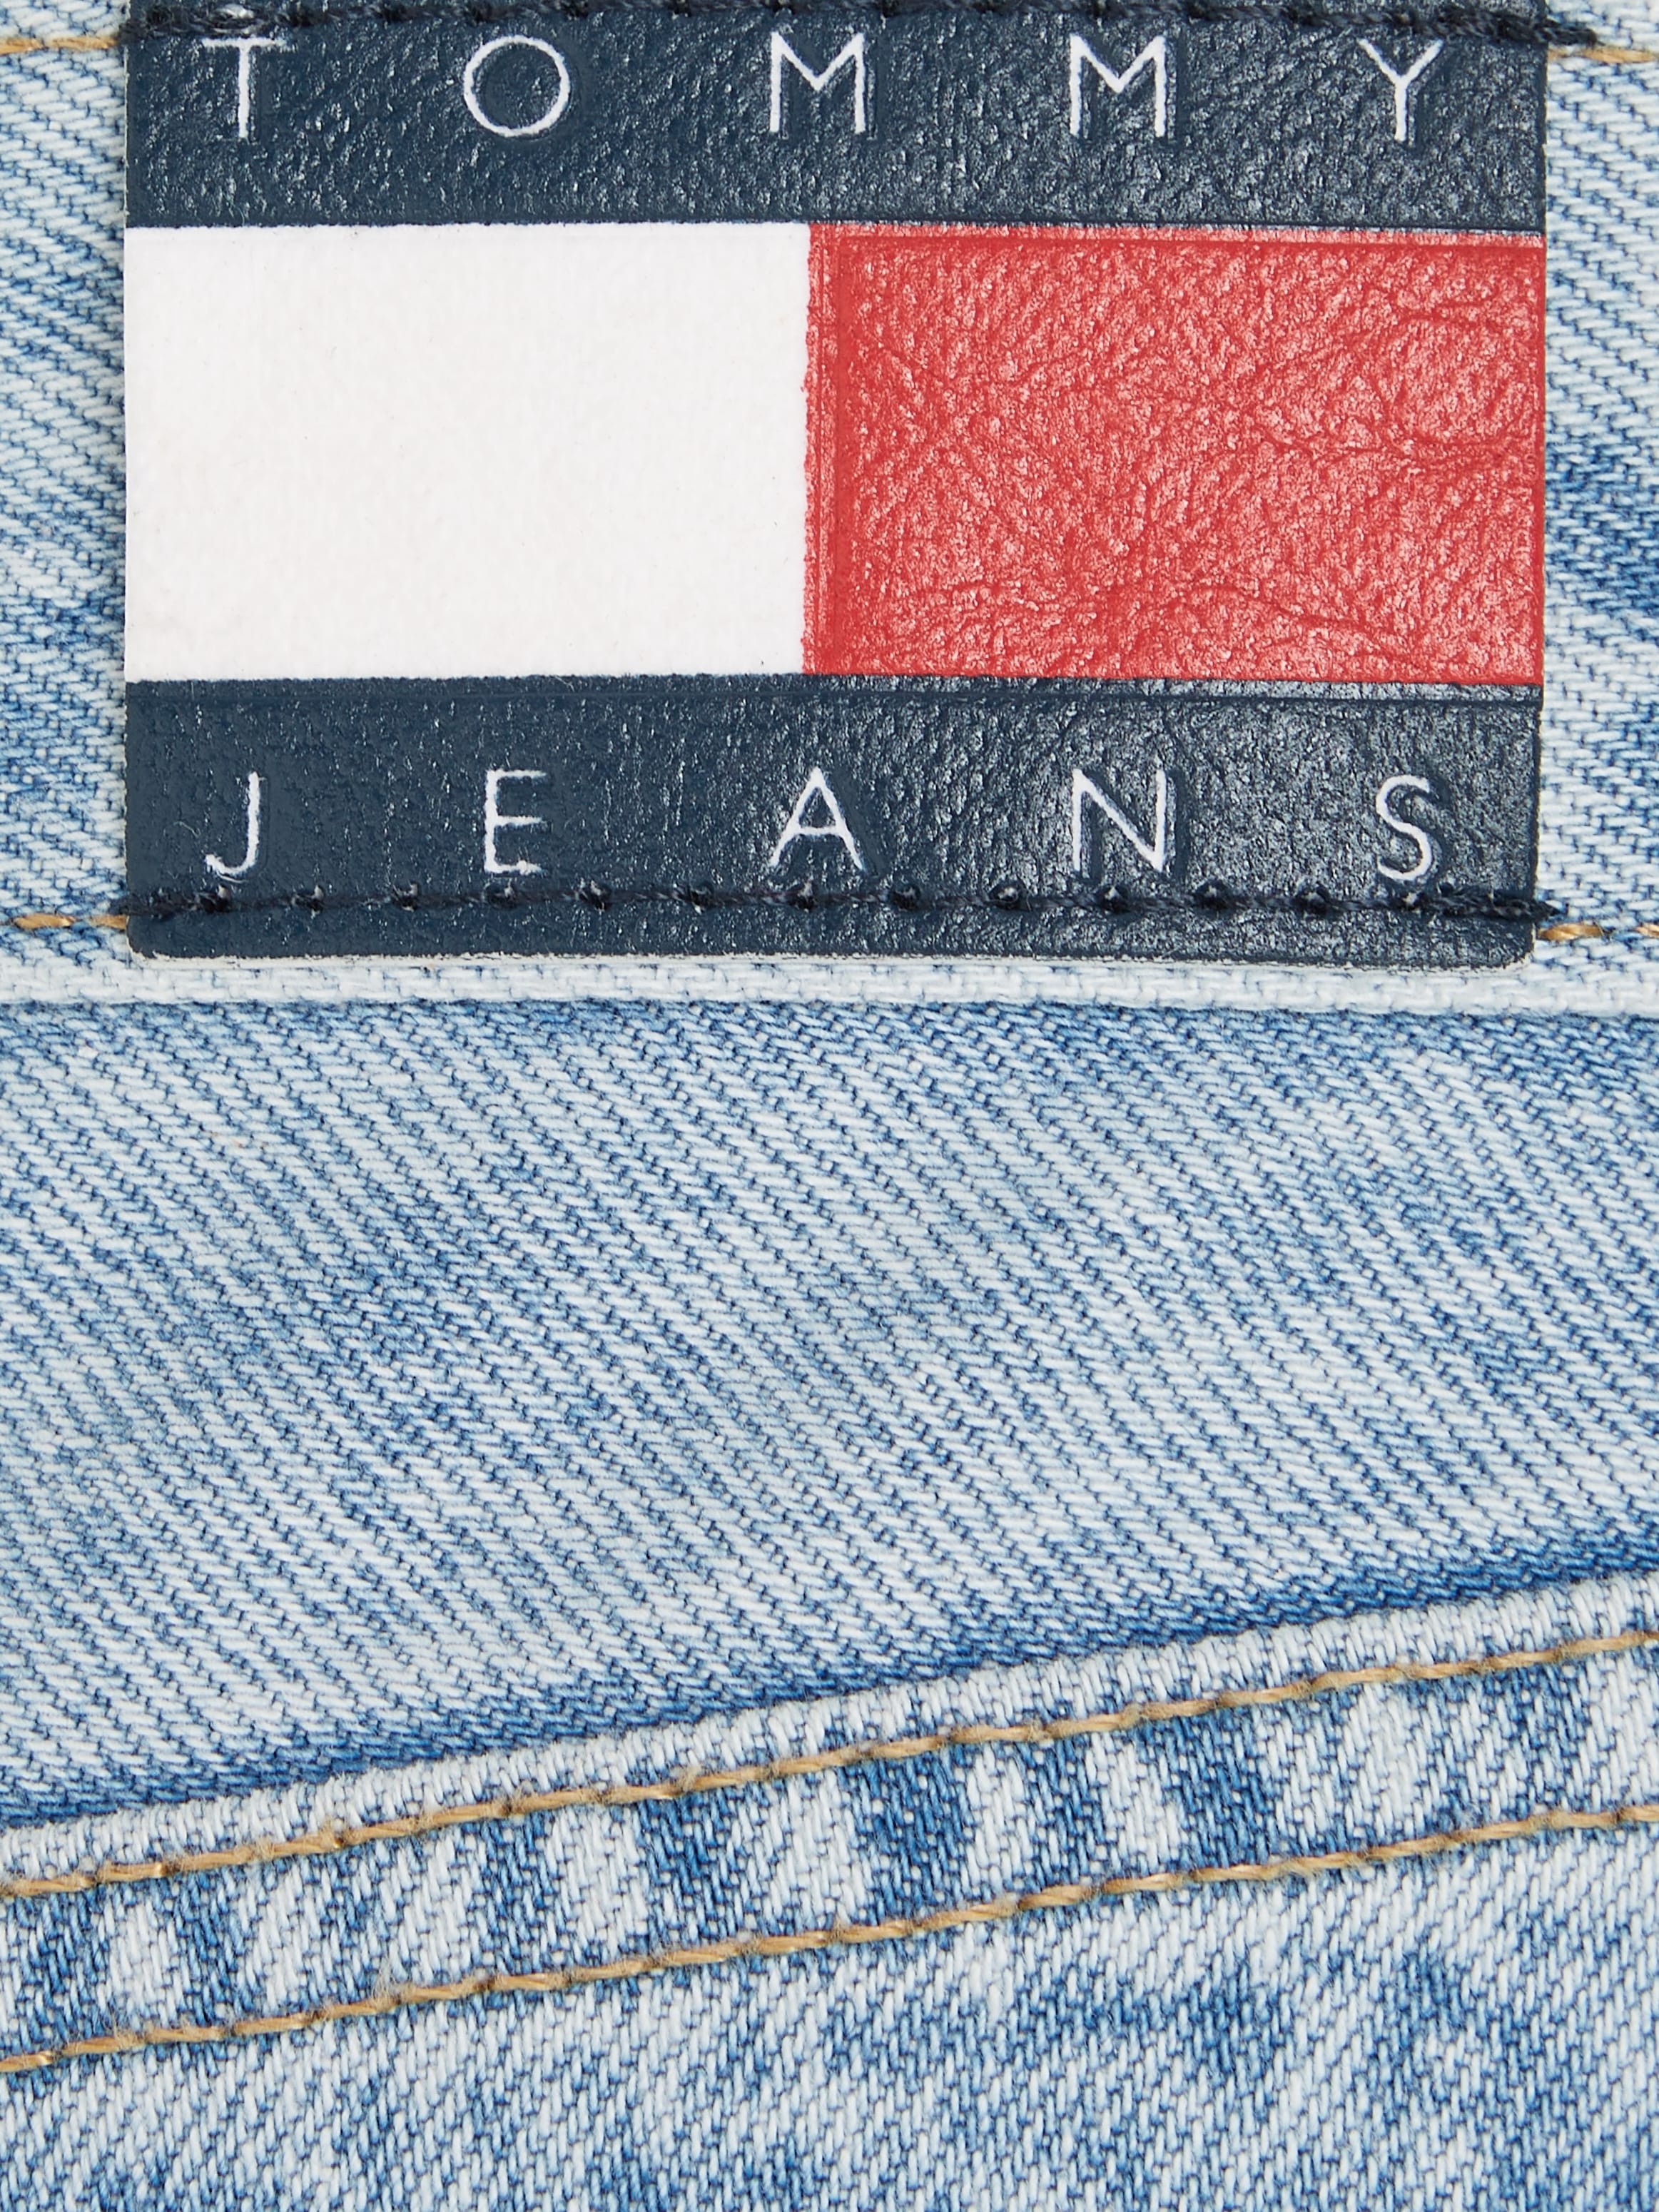 Tommy Jeans Shorts »HOT PANT BH0014«, mit leicht ausgefranstem Saum